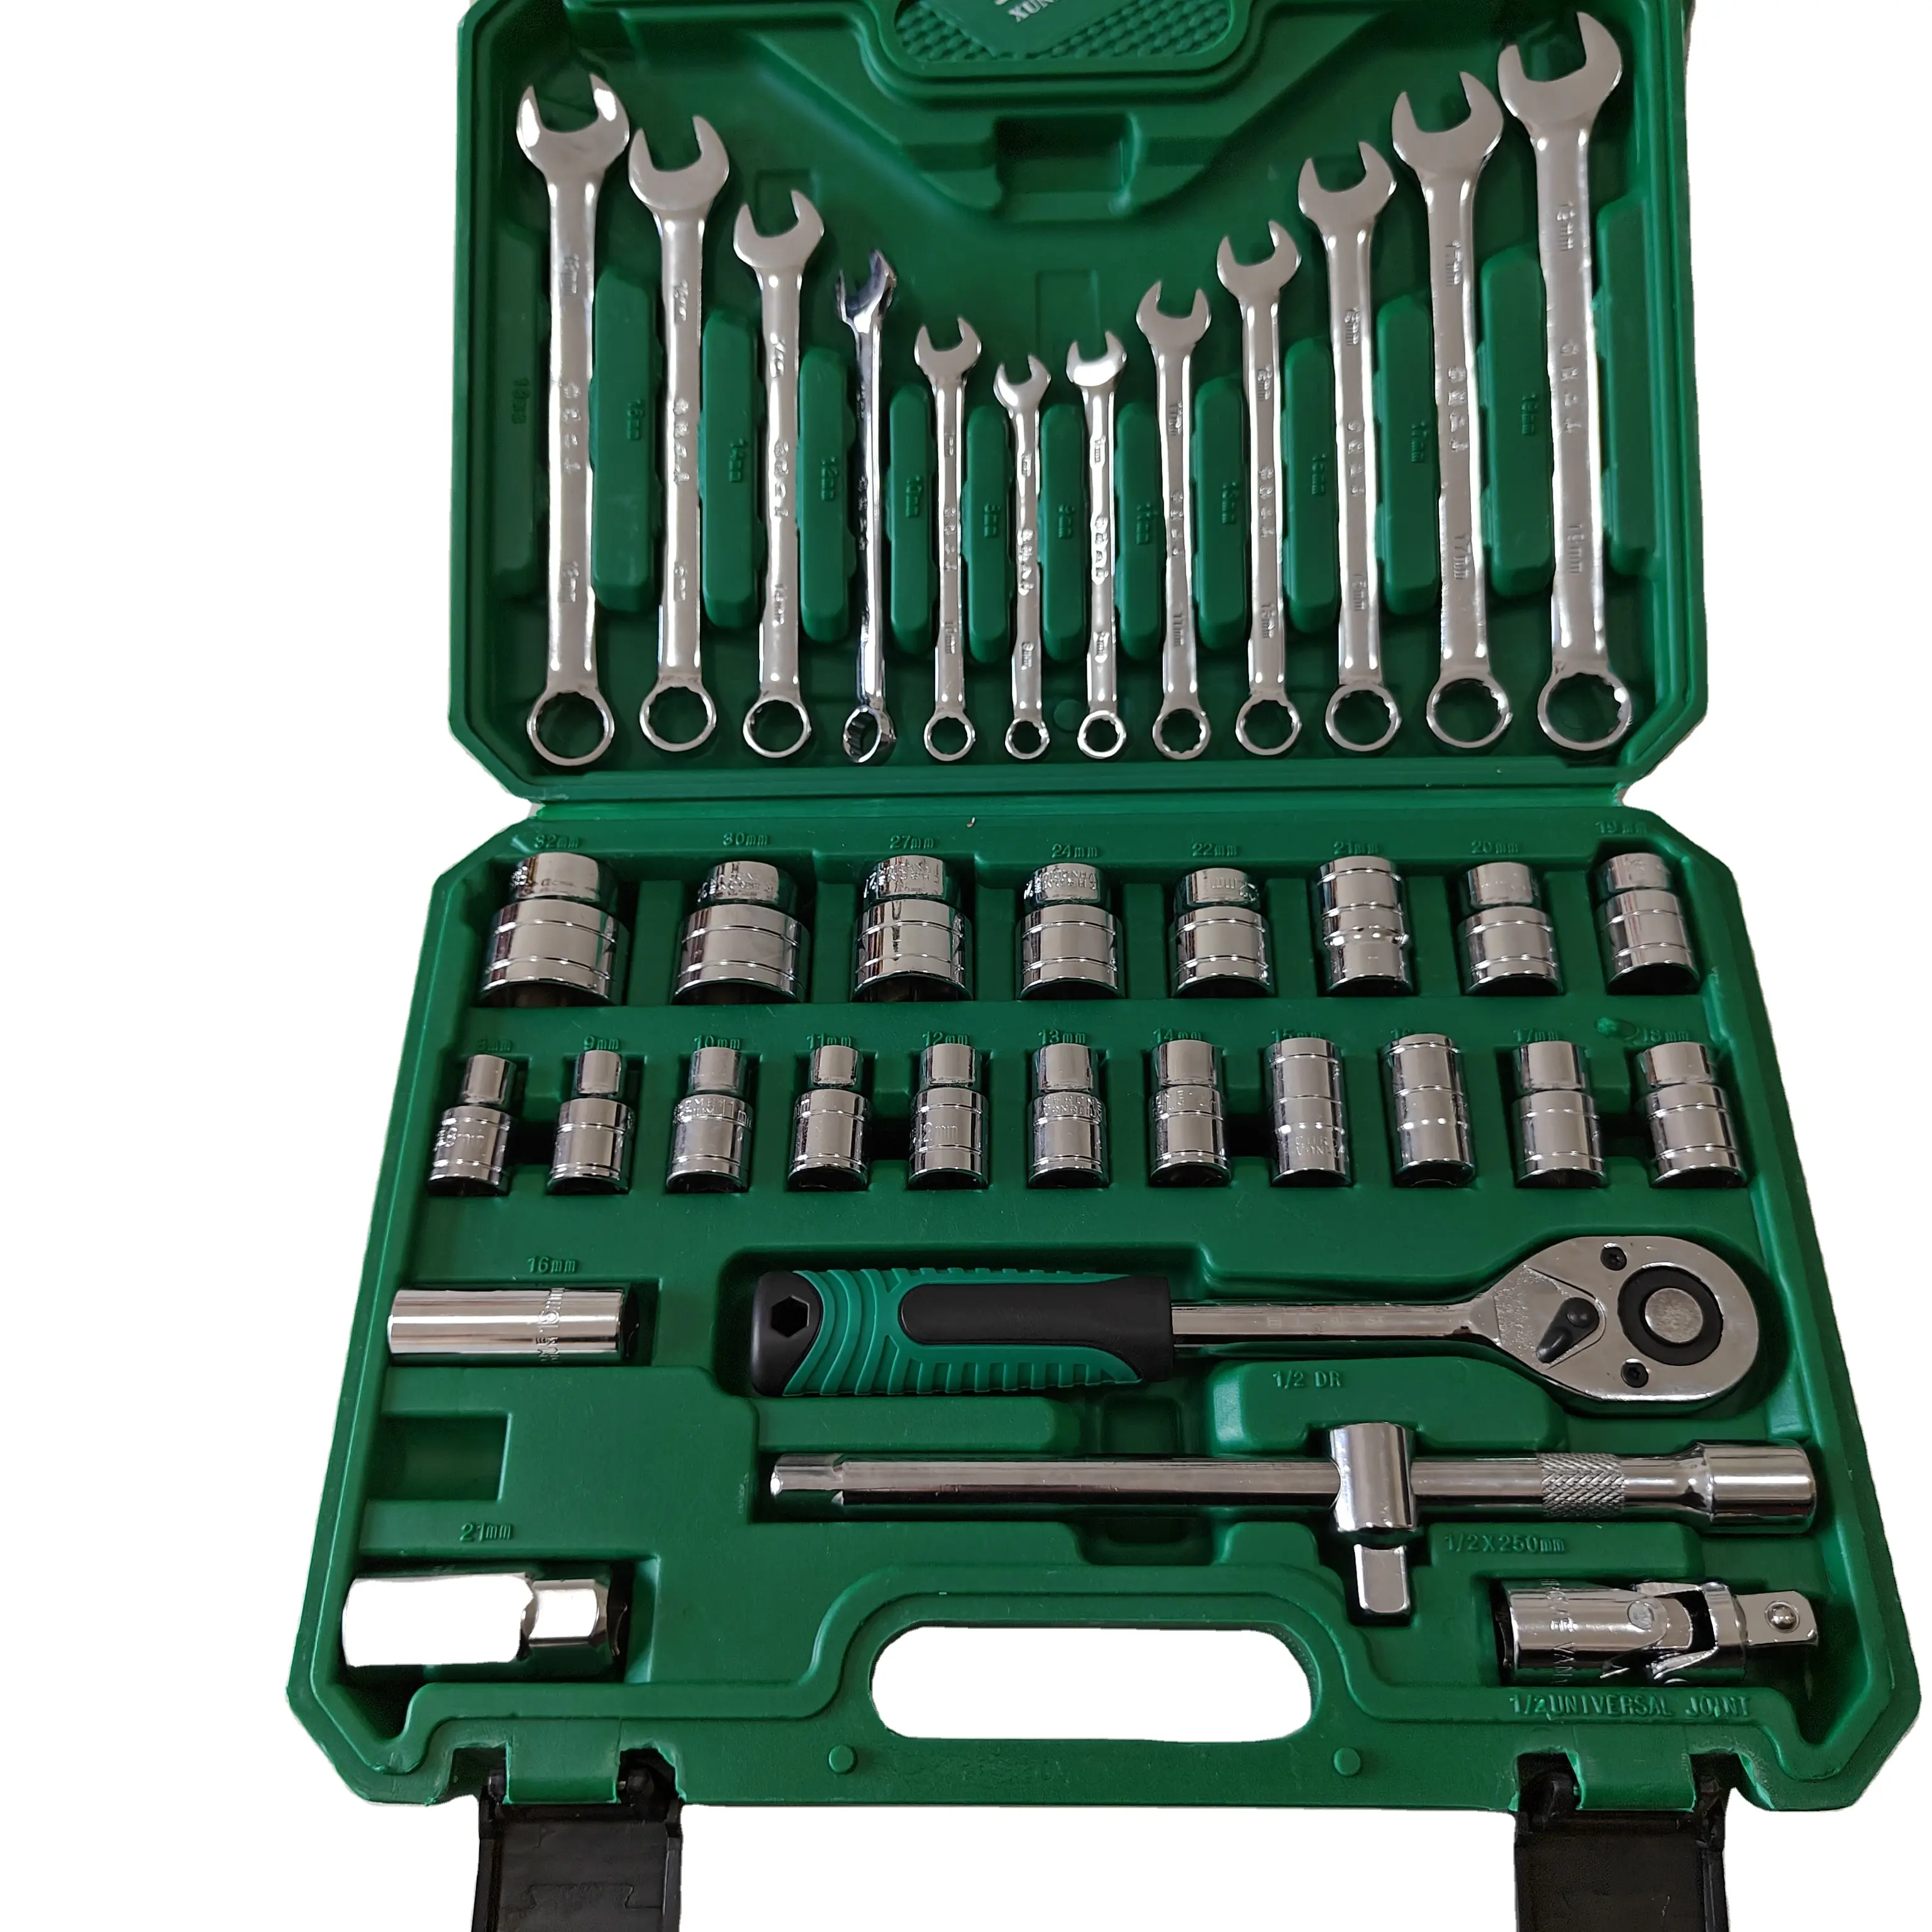 Mechanics Tools Kit und Steckschlüssels atz 37-teiliges Steckschlüssels atz für die mechanische Reparatur